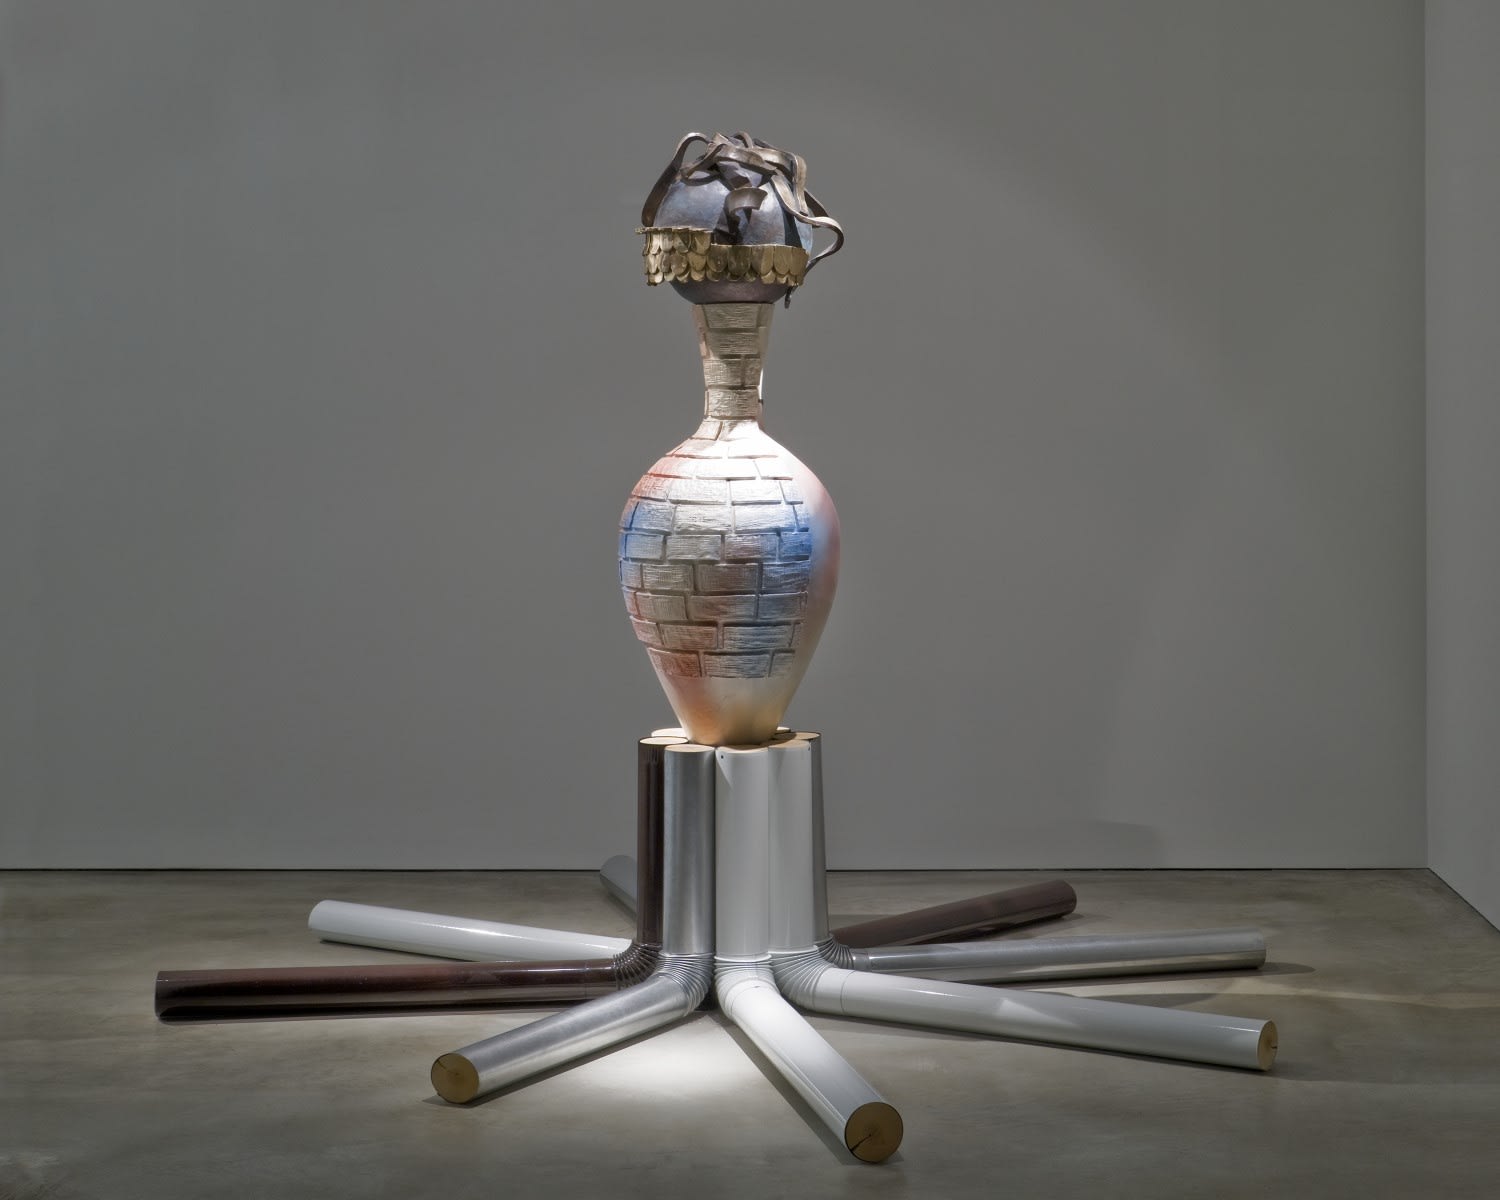 Dogma freier Raum, 2009, Bernhard Martin, Galerie Thomas Schulte